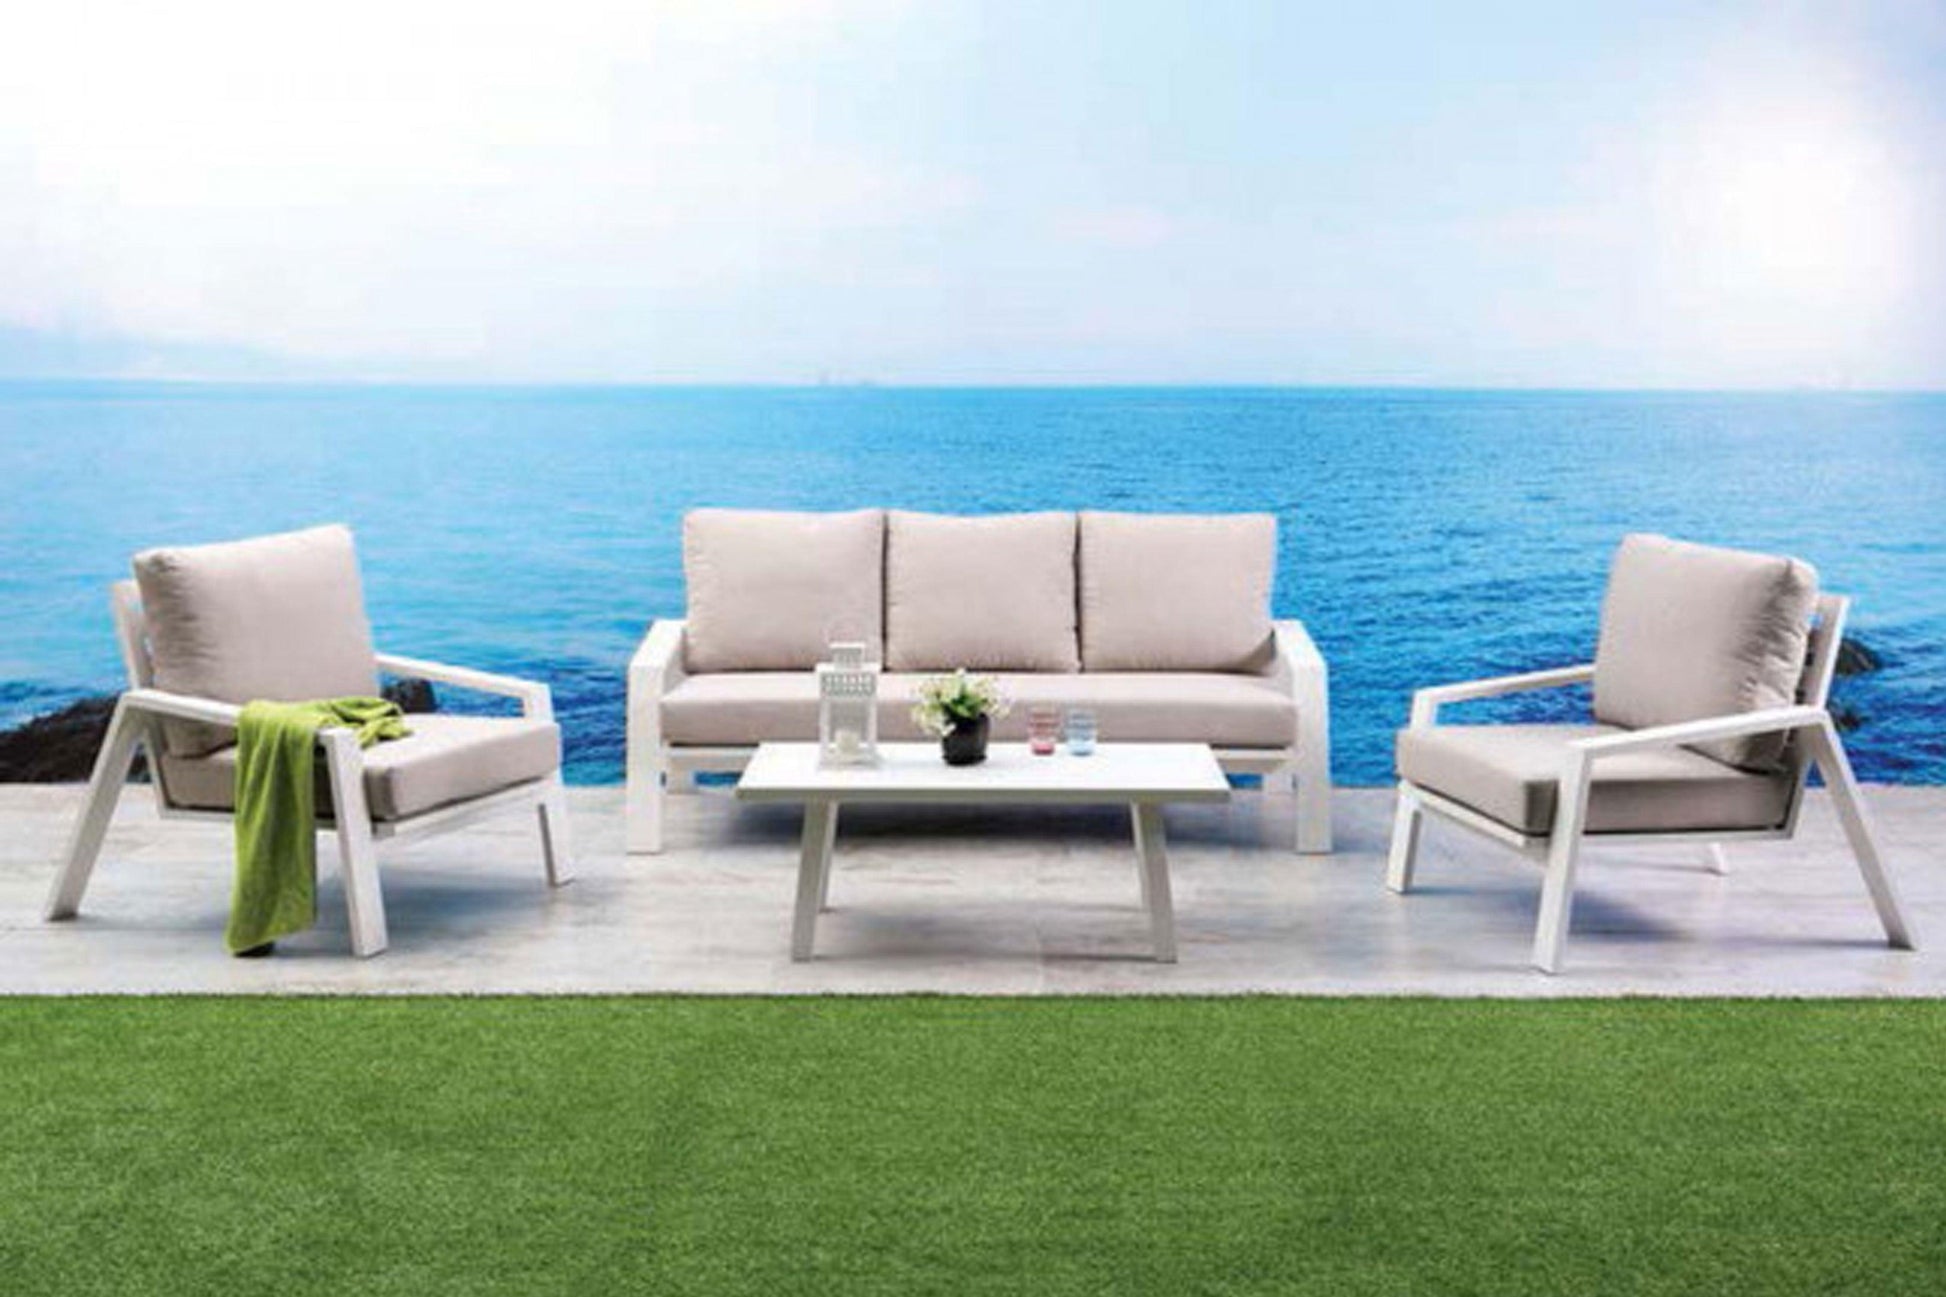 Mykonos 4 PC Seating Set w/off-white cushions SKU: PJO-2401-WHT-4PS - Venini Furniture 